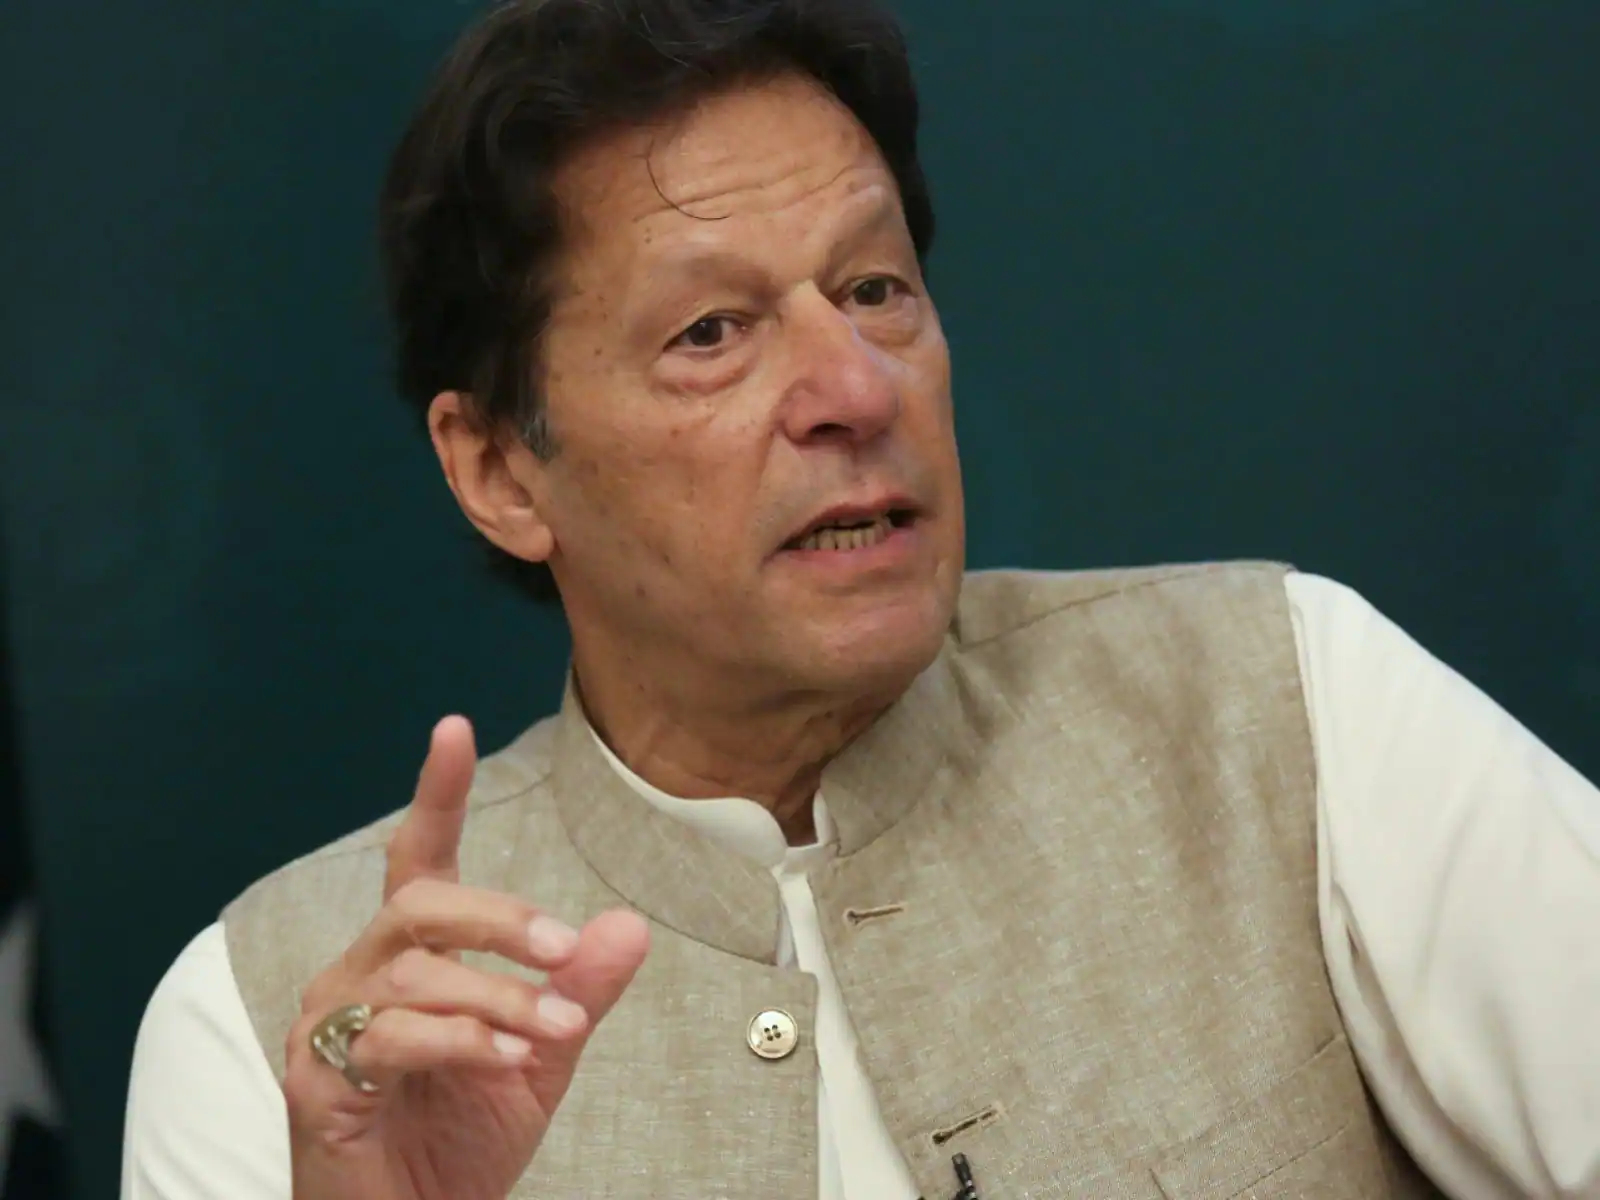 Pakistan pm Imran Khan's son arrested for liquor possession